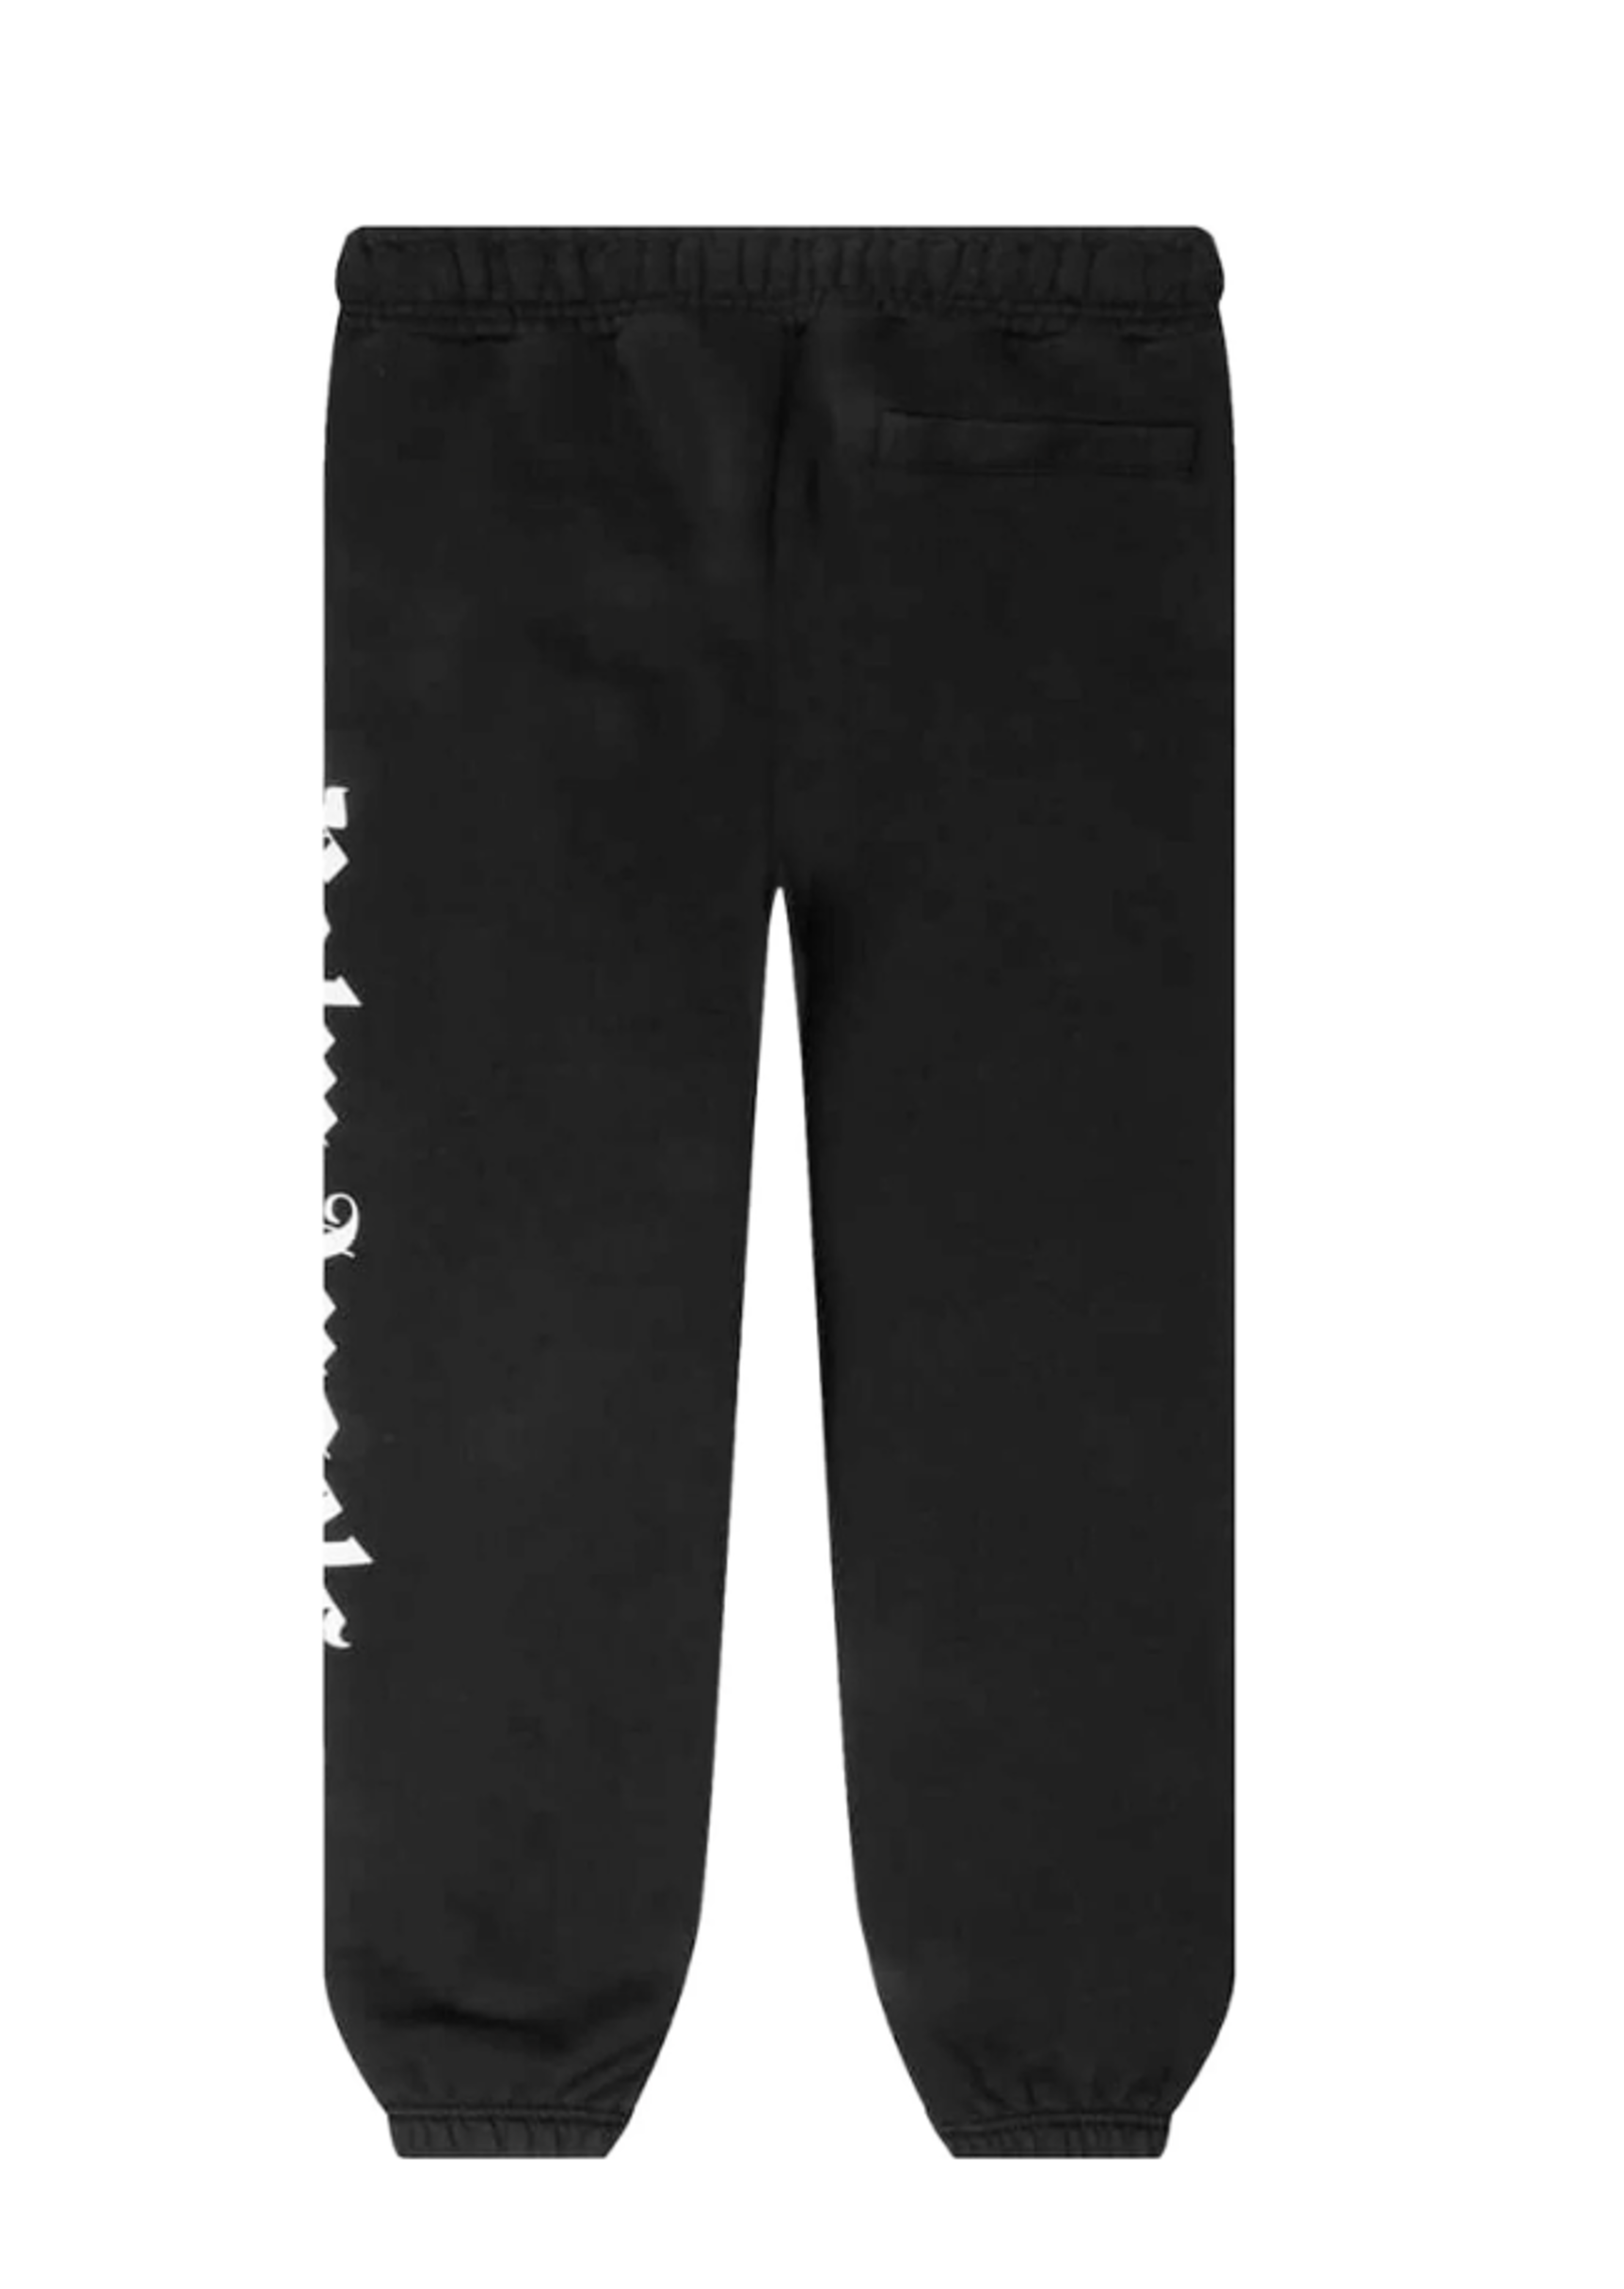 Alternate View 1 of Palm Angels - Side Logo Sweatpants - Black/White